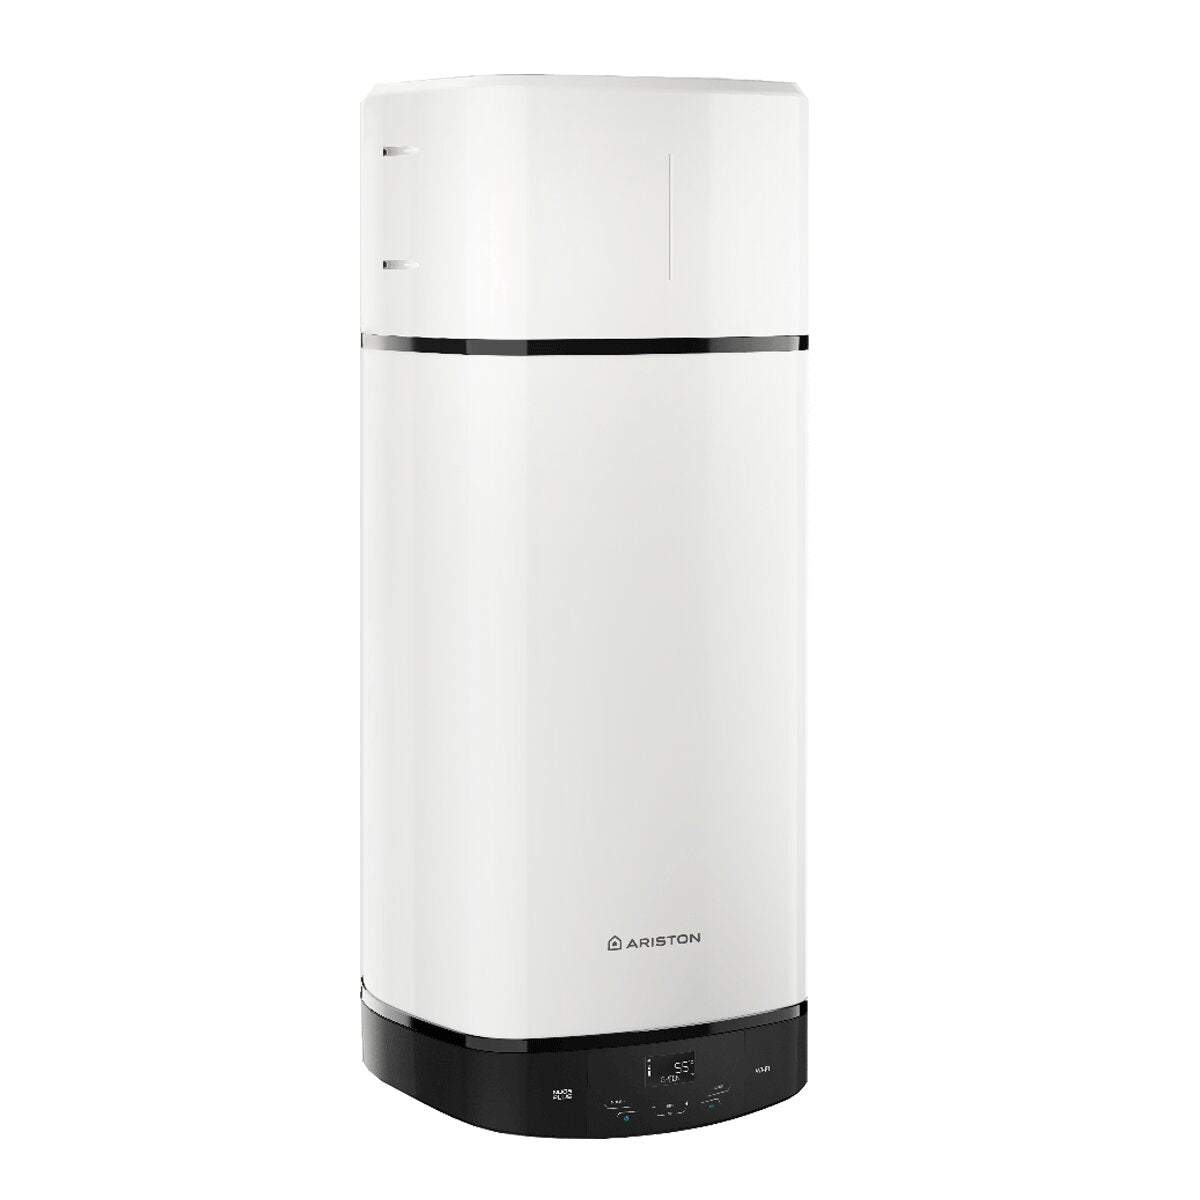 Ariston Nuos Plus R290 S2 WiFi A+ 110 Liter Wärmepumpen-Warmwasserbereiter